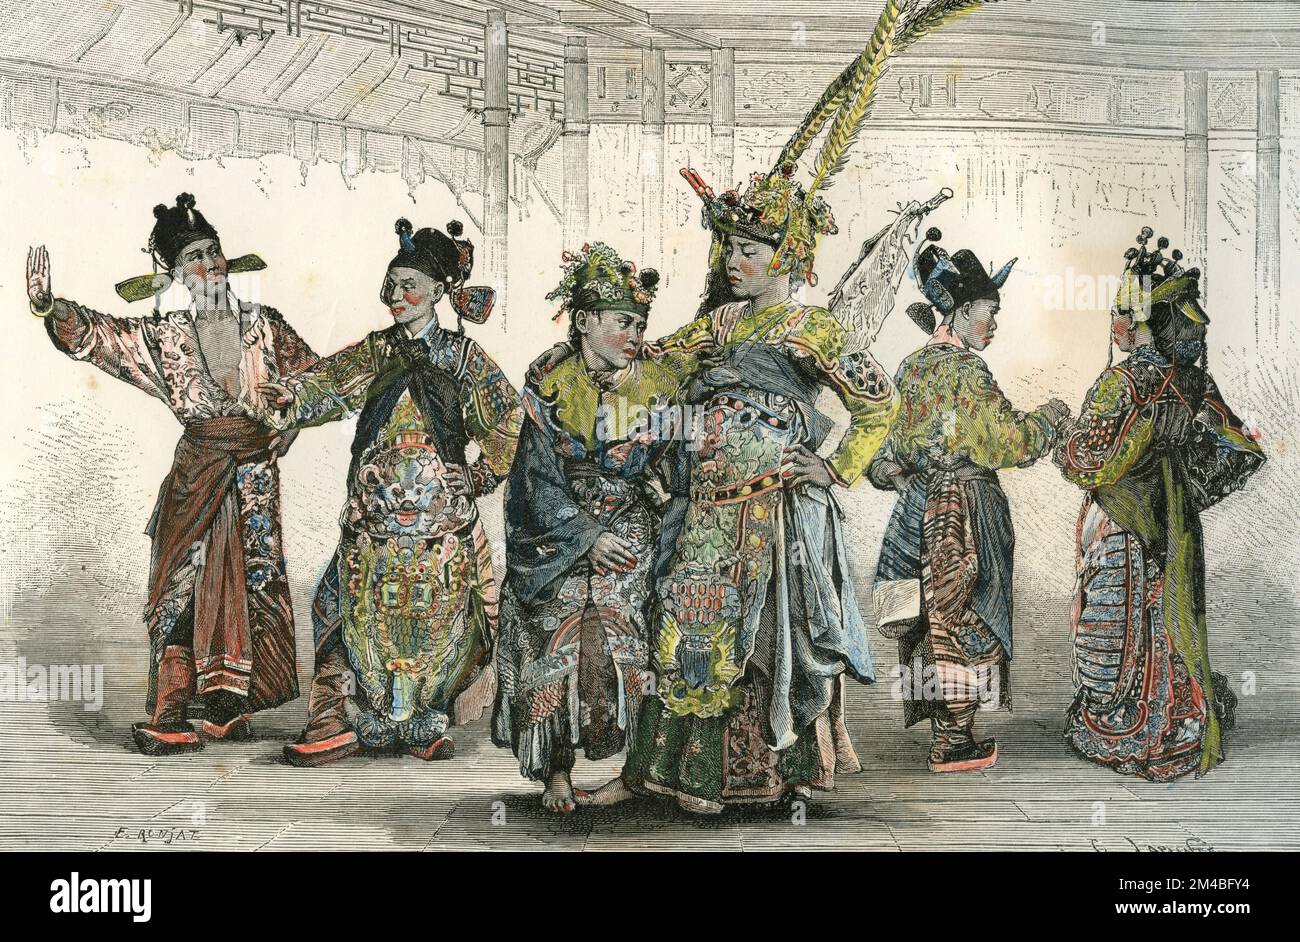 Acteurs chinois, Chine, illustration 1871 Banque D'Images